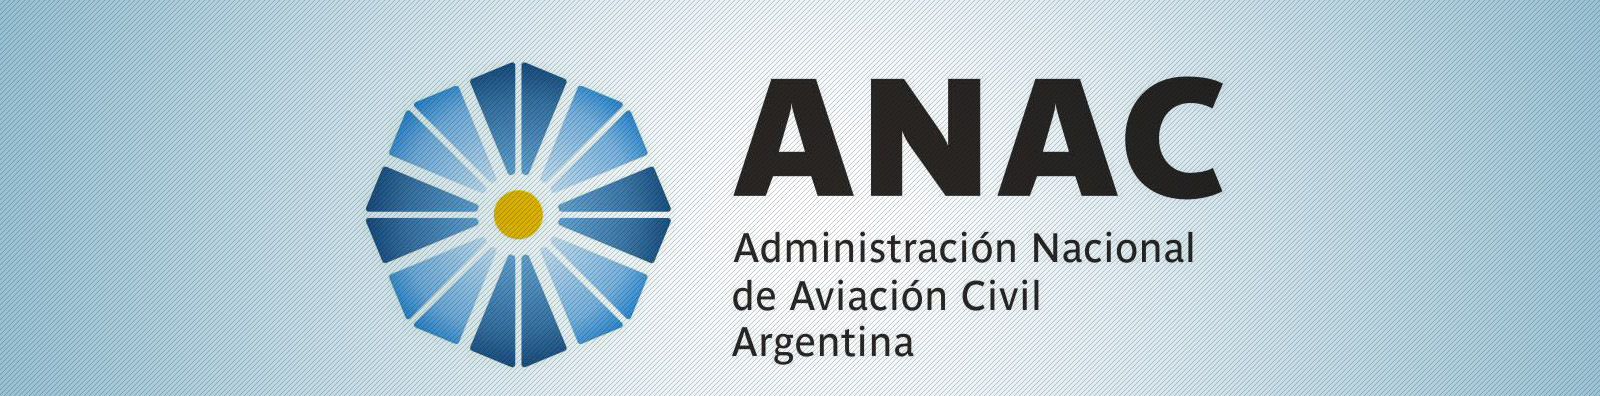 Líneas Aéreas Andes